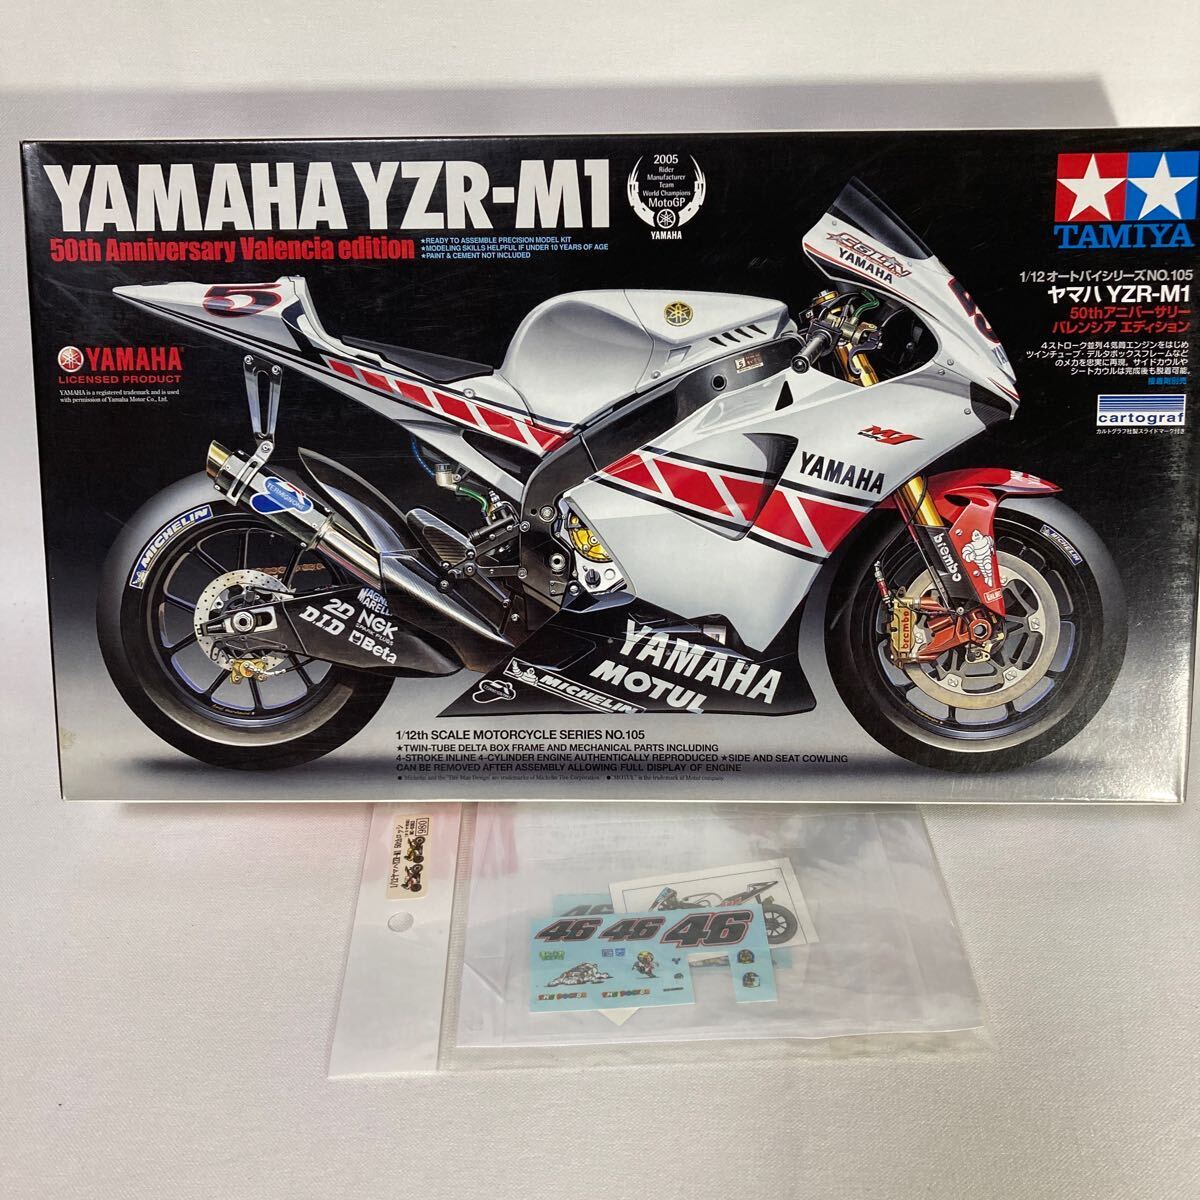  Tamiya 1/12 Yamaha YZR-M1 50th Anniversary baren sia edition 